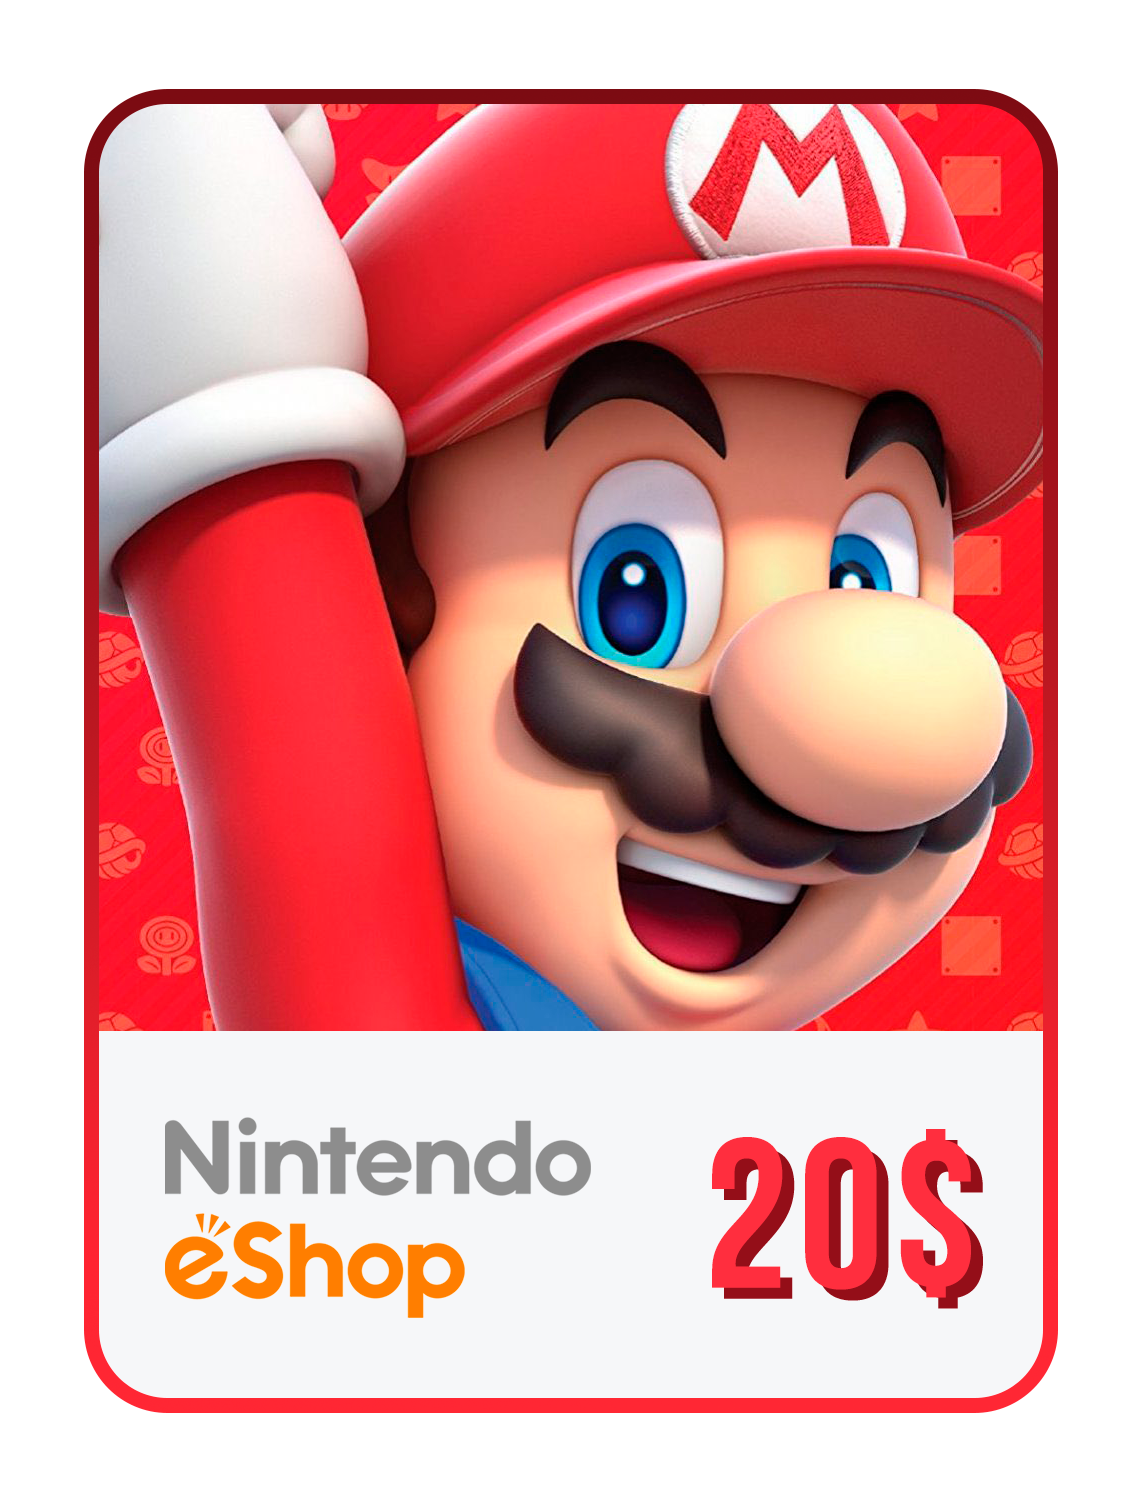 Nintendo оплата. Nintendo. Nintendo eshop. Пополнение Nintendo. Nintendo eshop 120 zl.